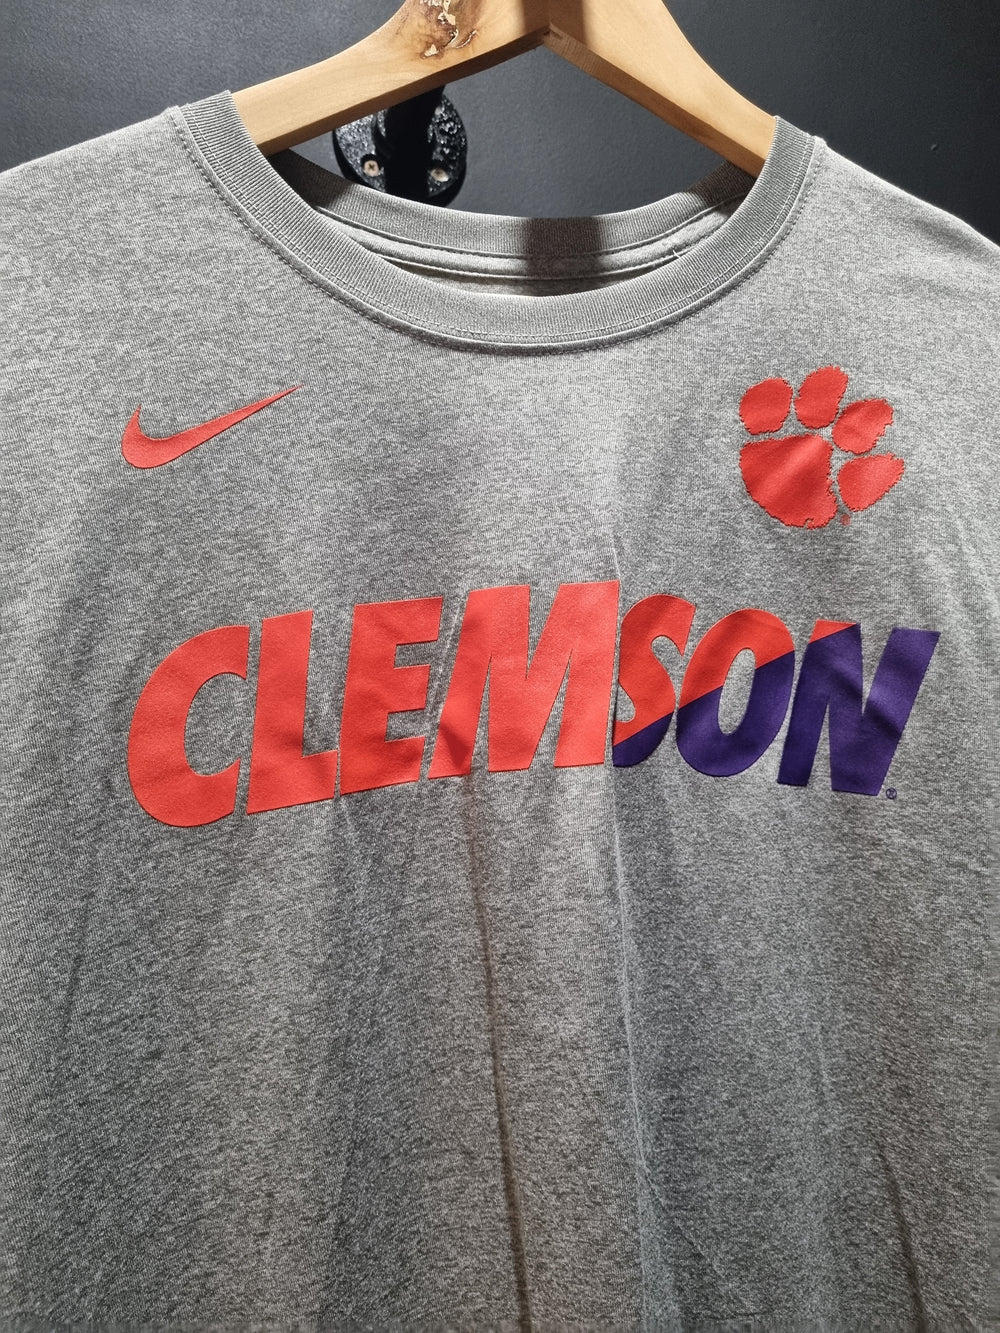 Clemson Tigers Nike Dri Fit Sweatshirt Large